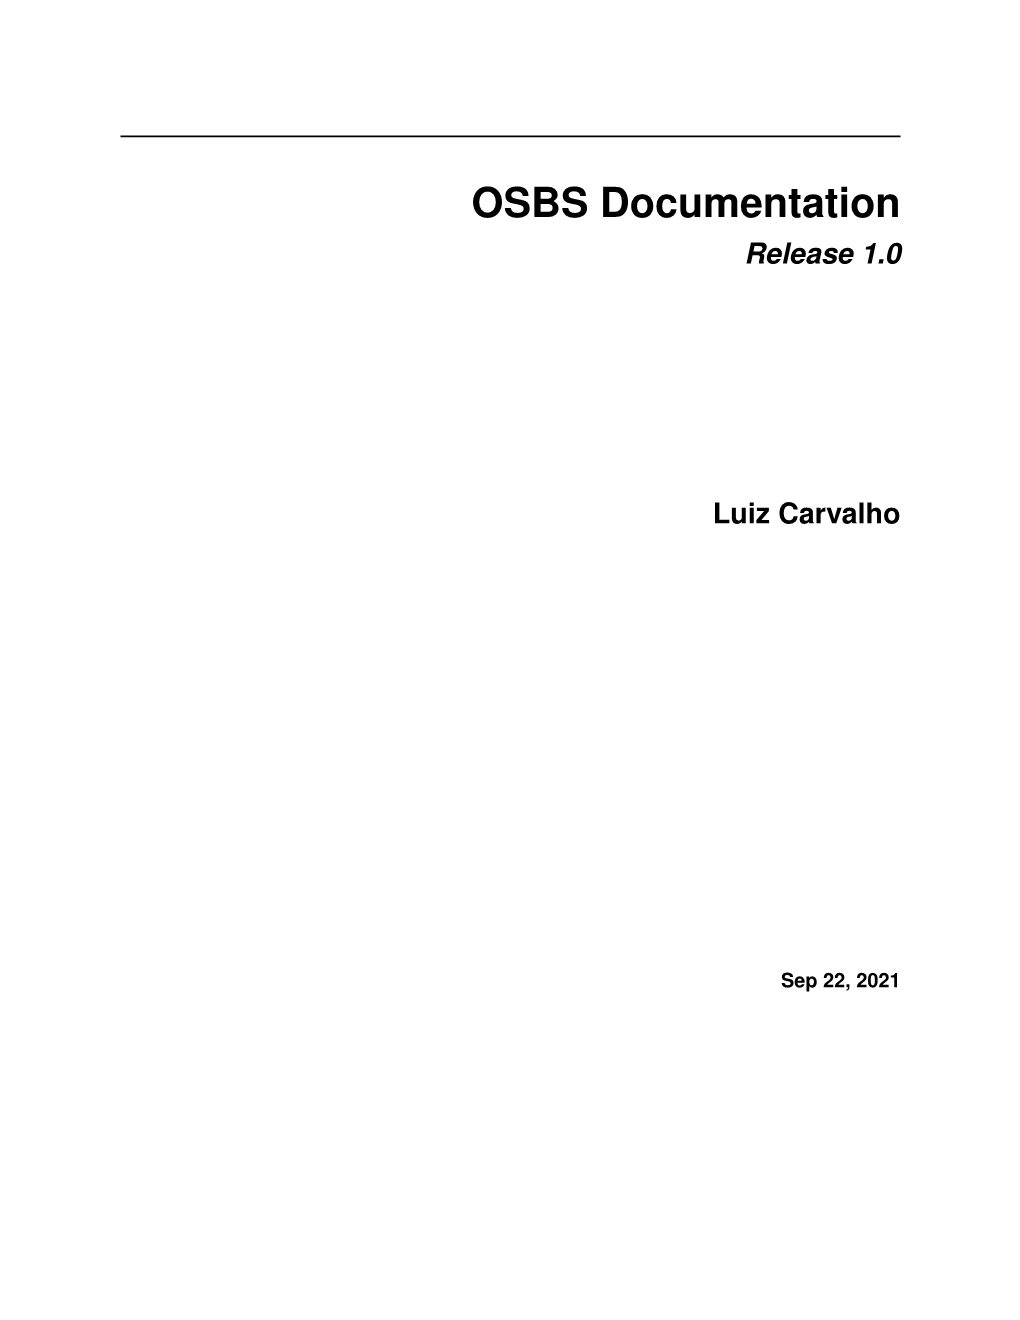 OSBS Documentation Release 1.0